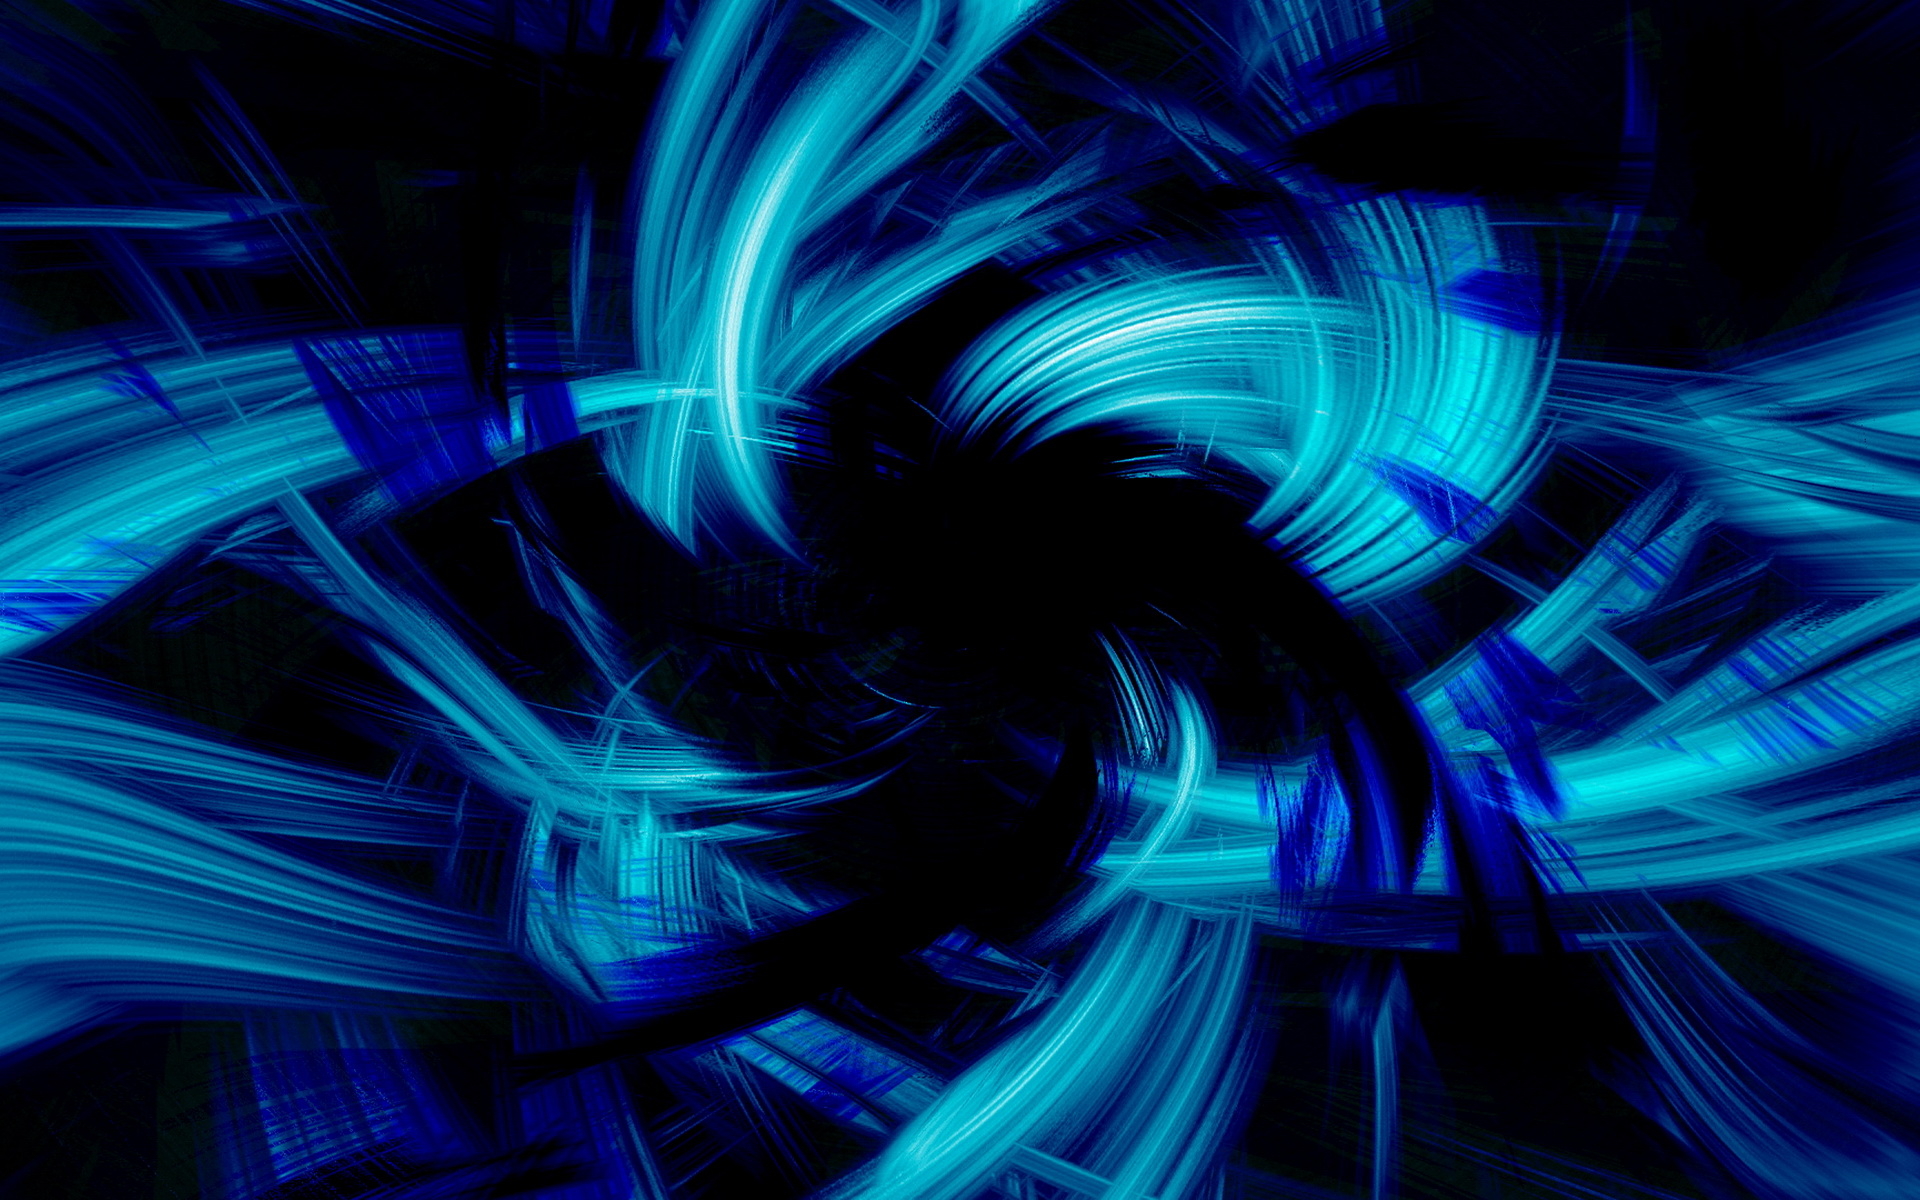 fondos de pantalla de movimiento,azul,ligero,azul eléctrico,arte fractal,diseño gráfico